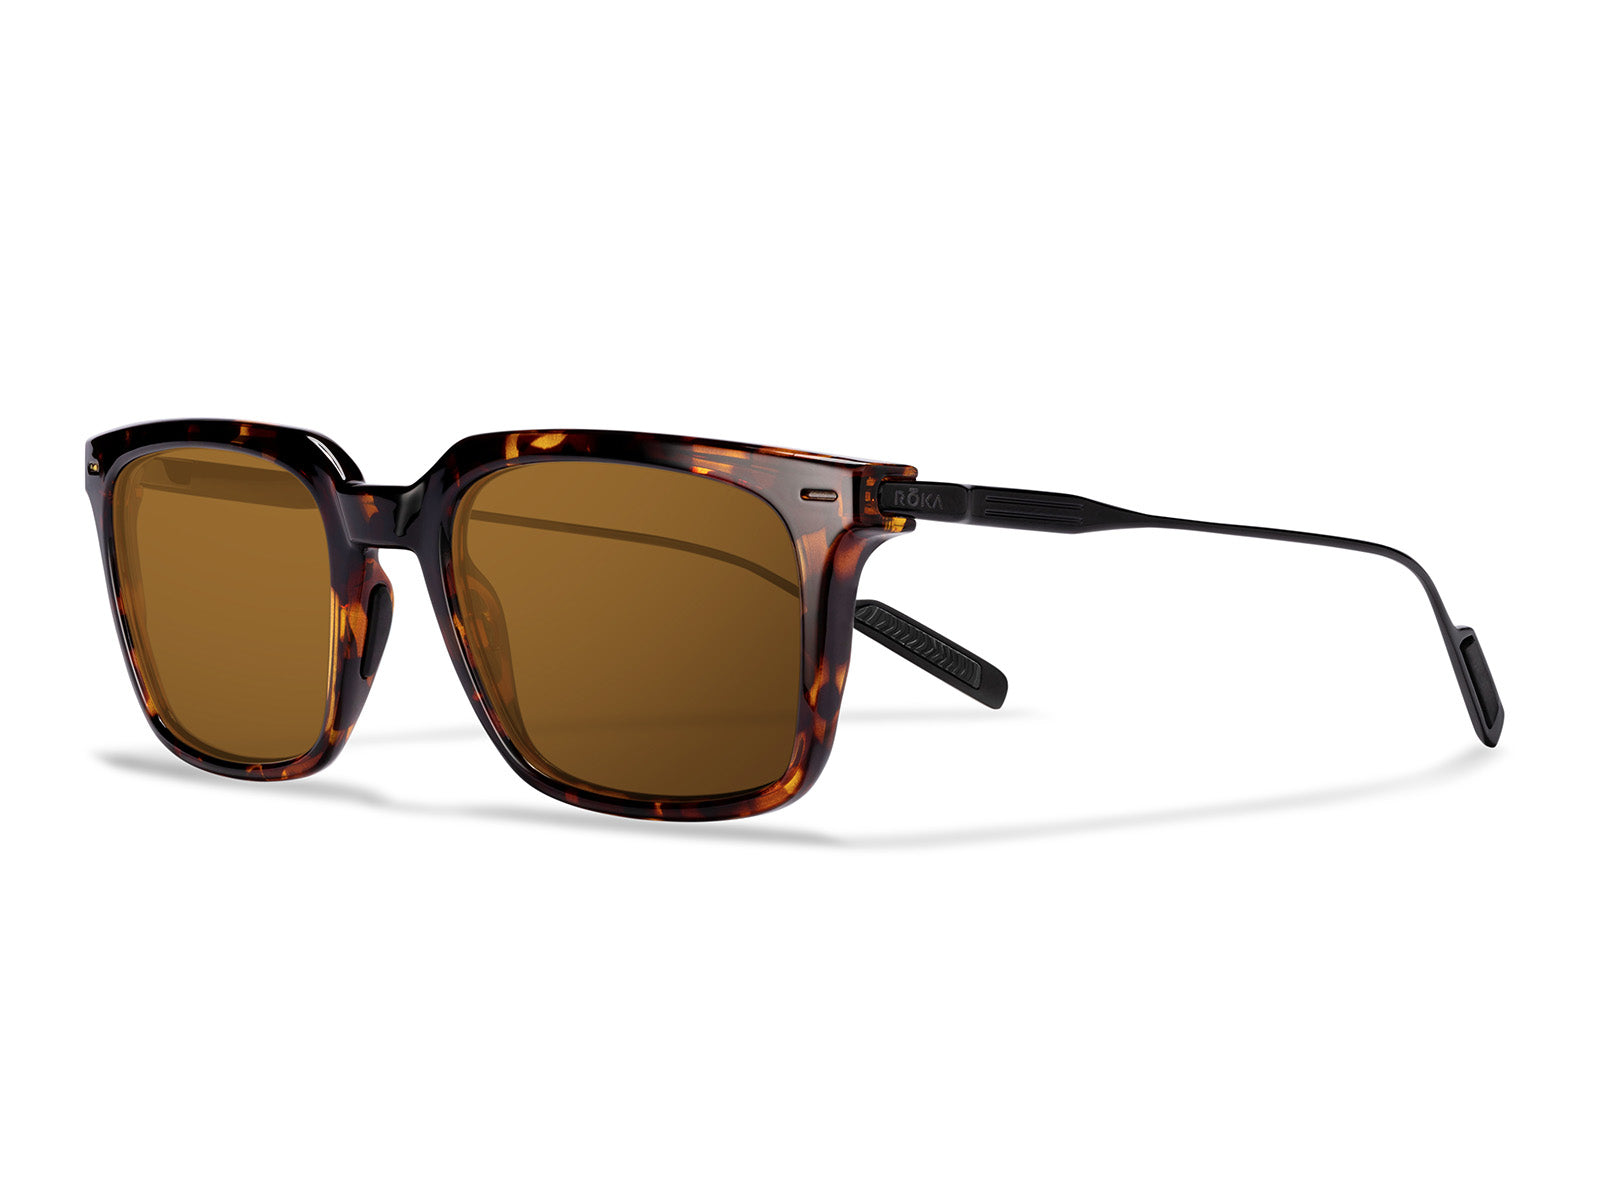 Booker - Rectangular, Mixed Material Sunglasses